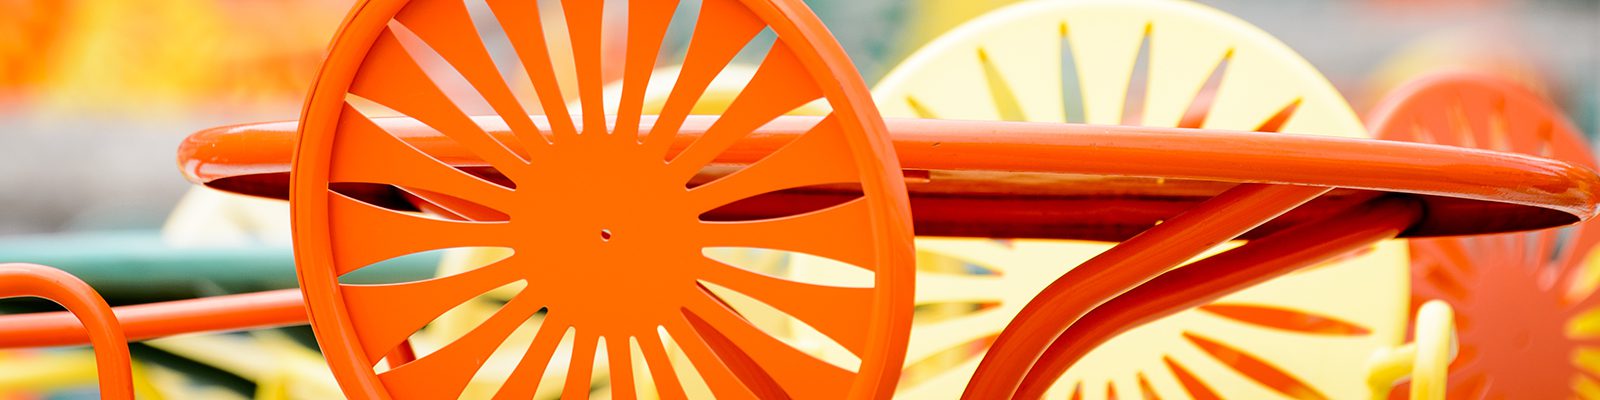 Close up shot of bright orange and yellow Memorial Union Terrace sunburst chairs